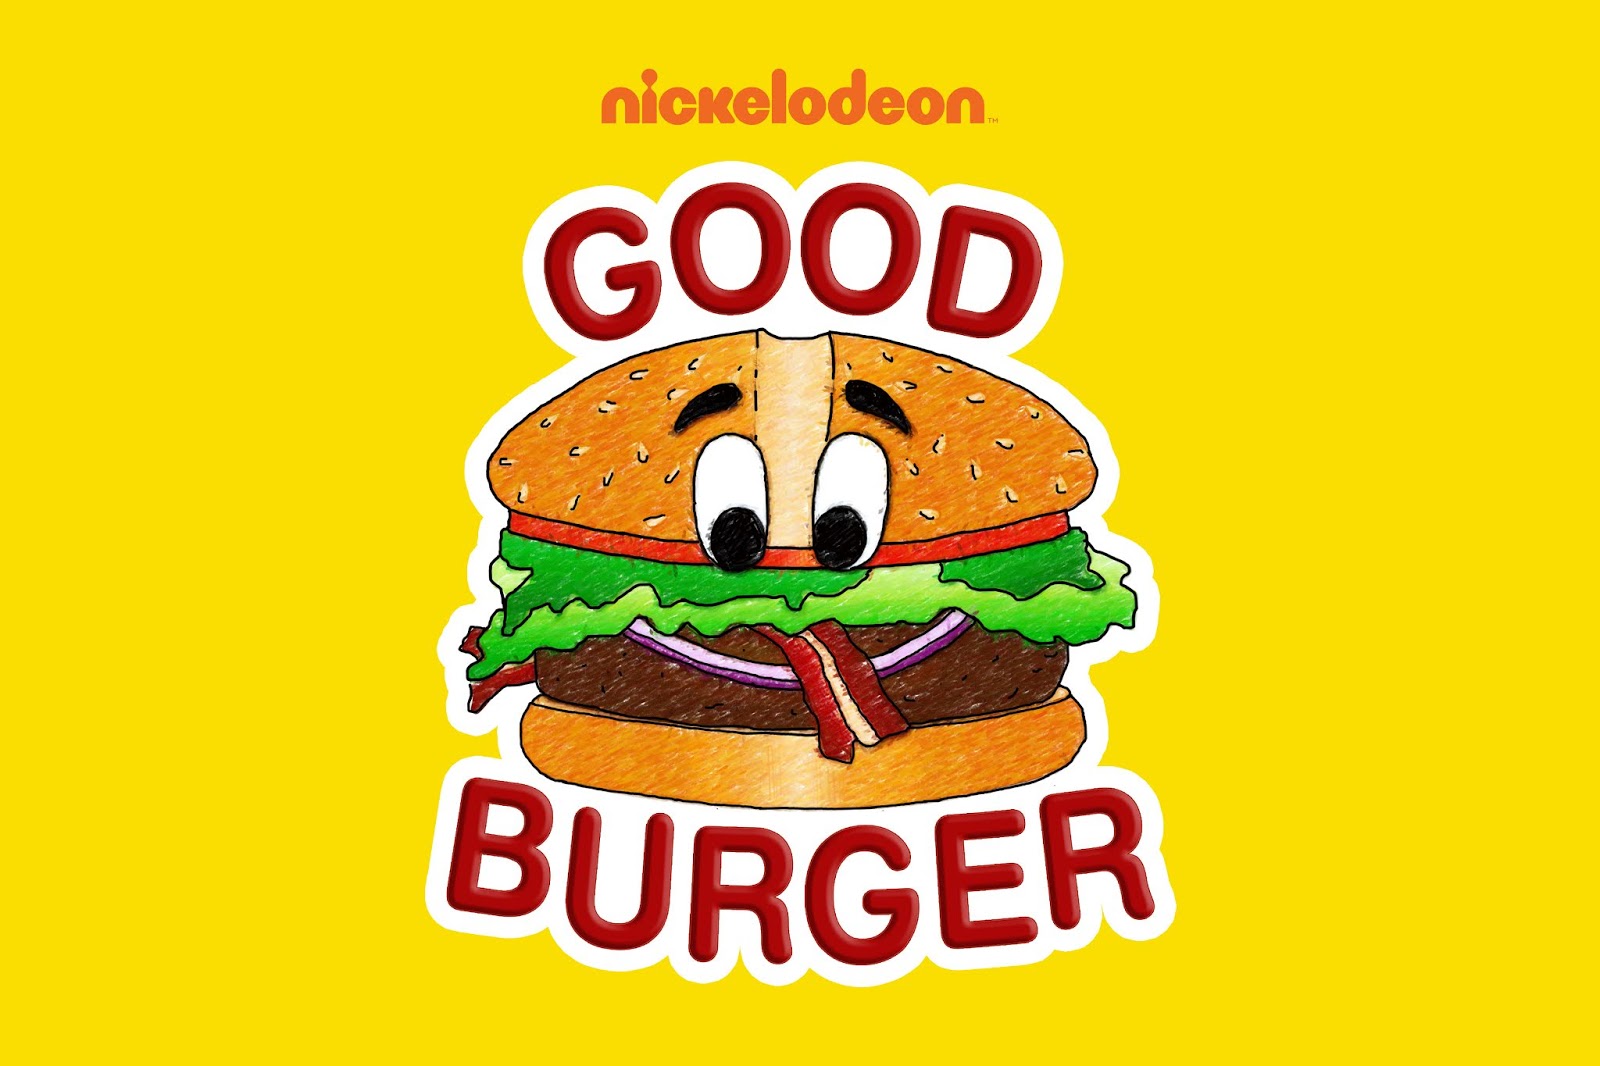 https://1.bp.blogspot.com/-DULvcMm9Vkk/XQKNys8SCWI/AAAAAAABH0E/uG0ke-sujf8Jy3WbeqbnhTSJ8e-mQa6zgCLcBGAs/s1600/good-burger-pop-up-logo-nickelodeon-nick-press-all-that.jpg